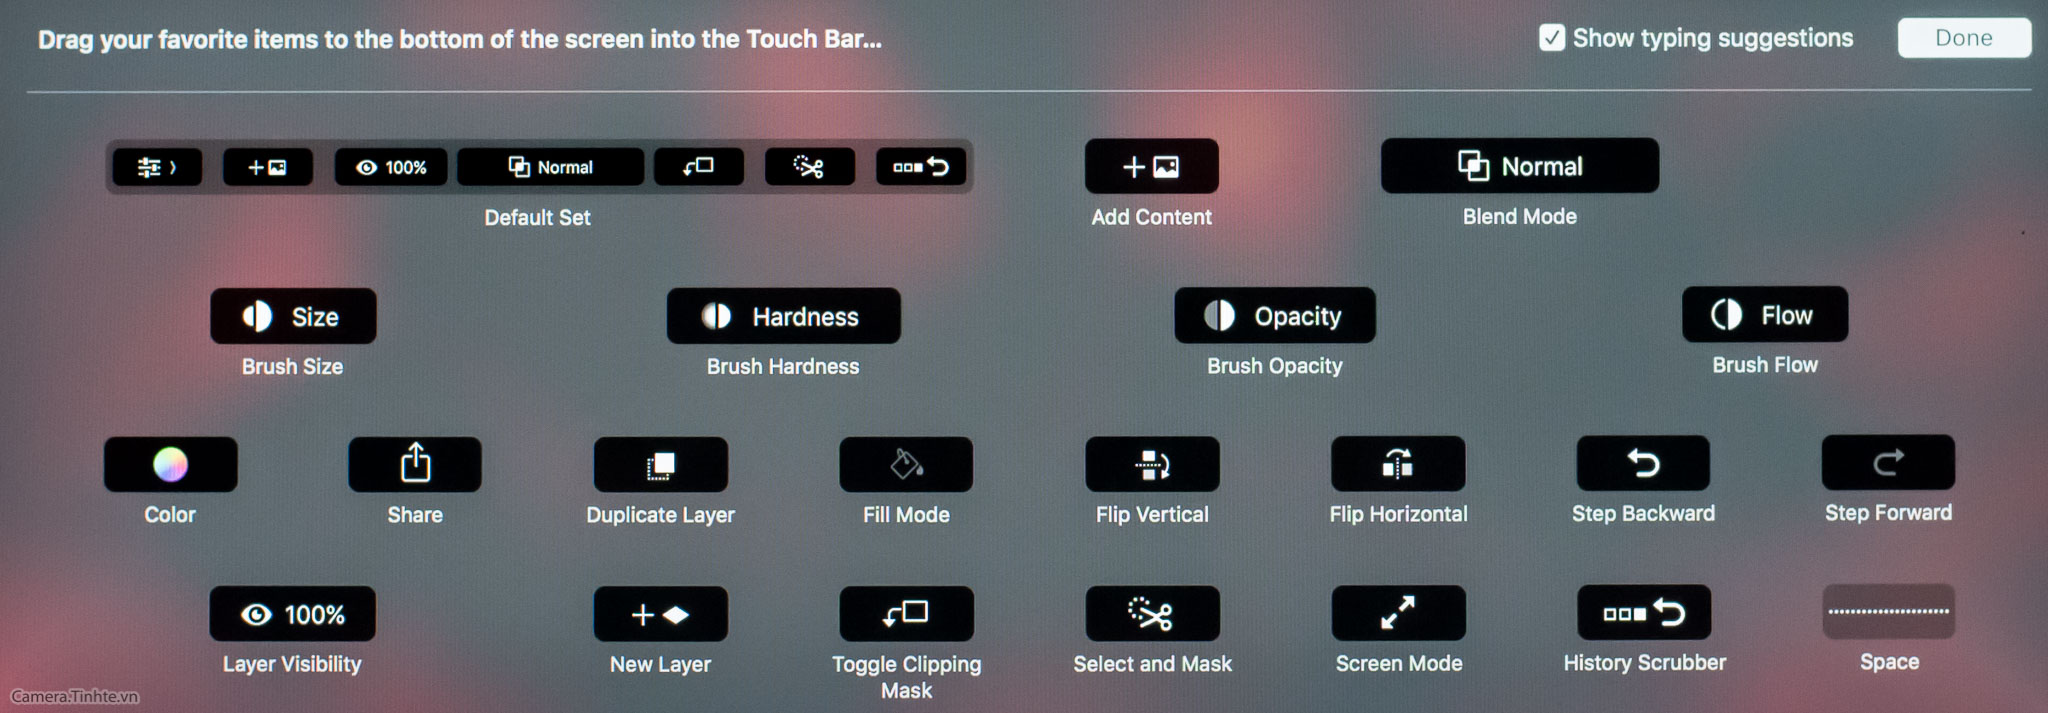 Macbook Touch Bar Photoshop - Camera.tinhte.vn -1-2.jpg